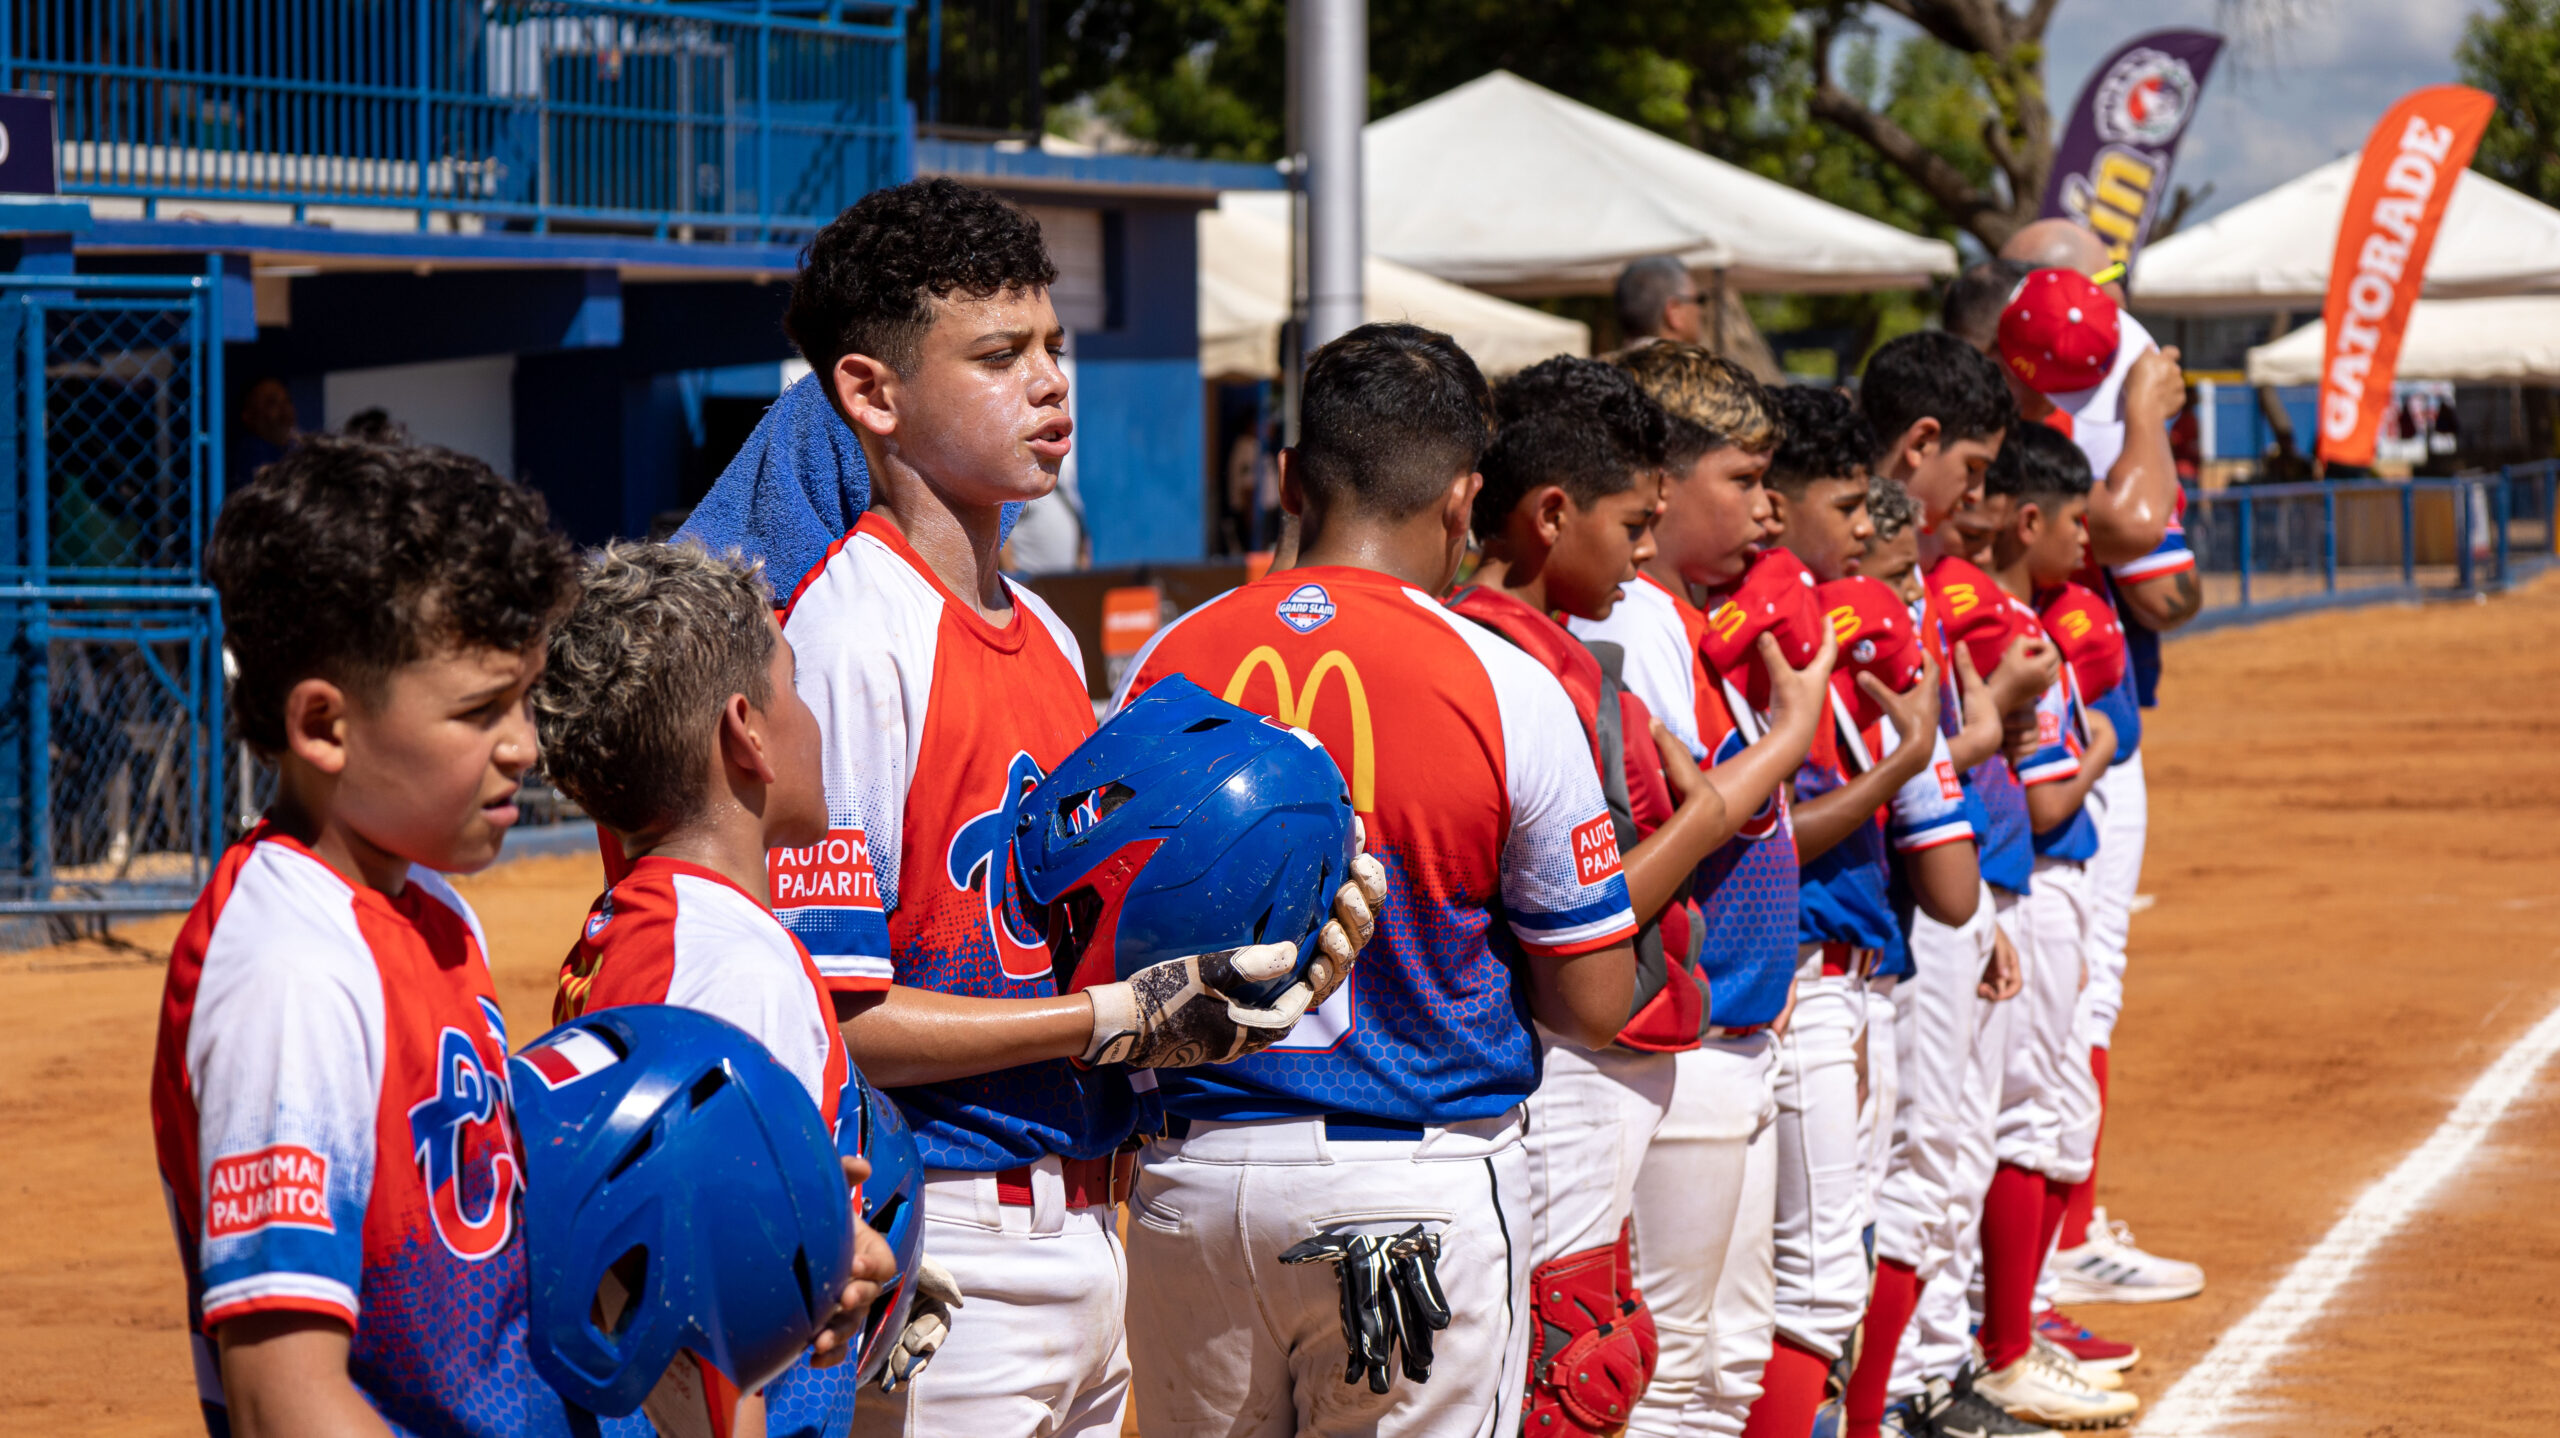 Marabinos en Chile impulsan béisbol profesional infantil